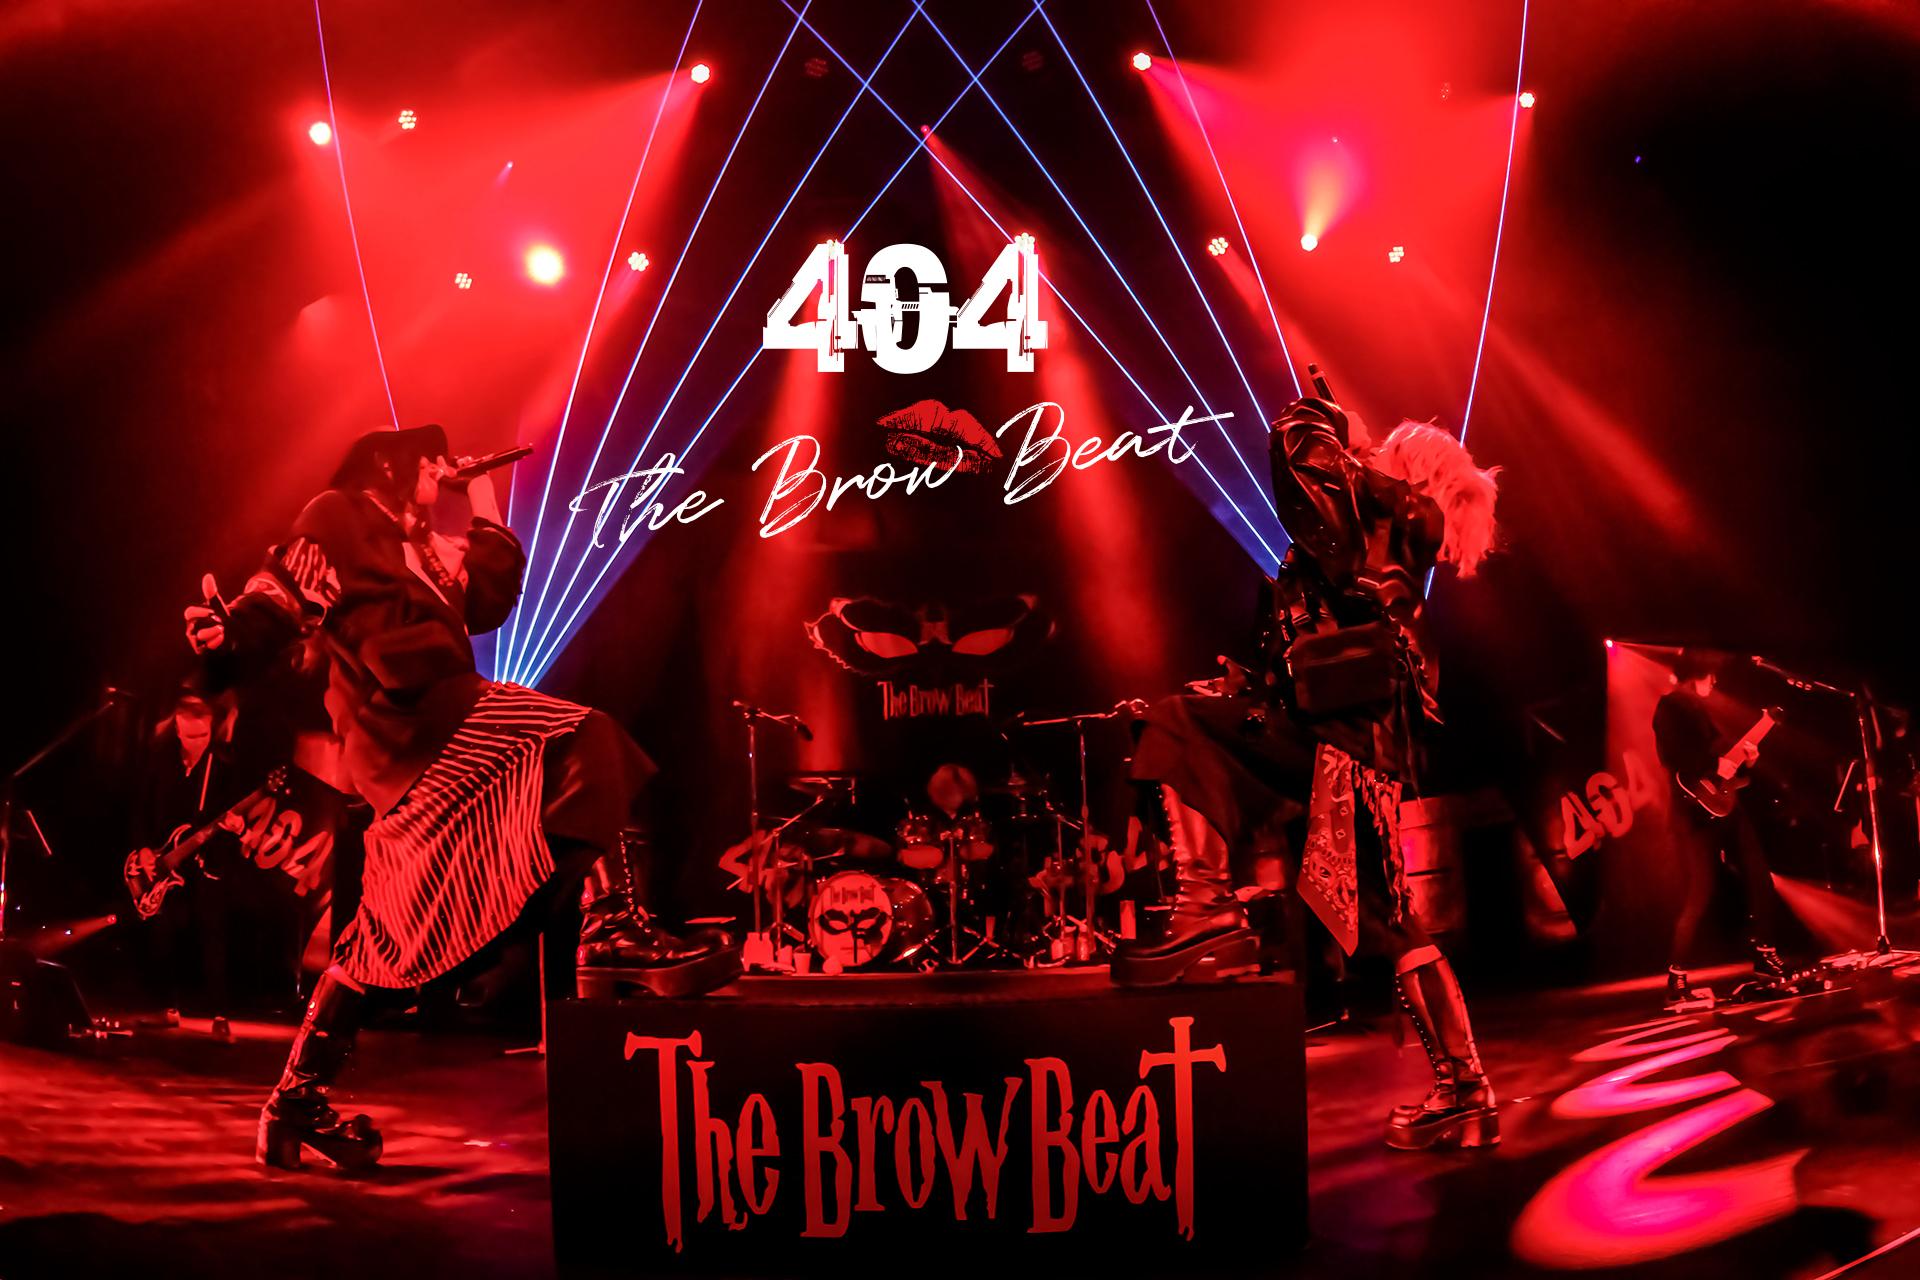 The Brow Beat Live Tour 2022 ブロビ　佐藤流司